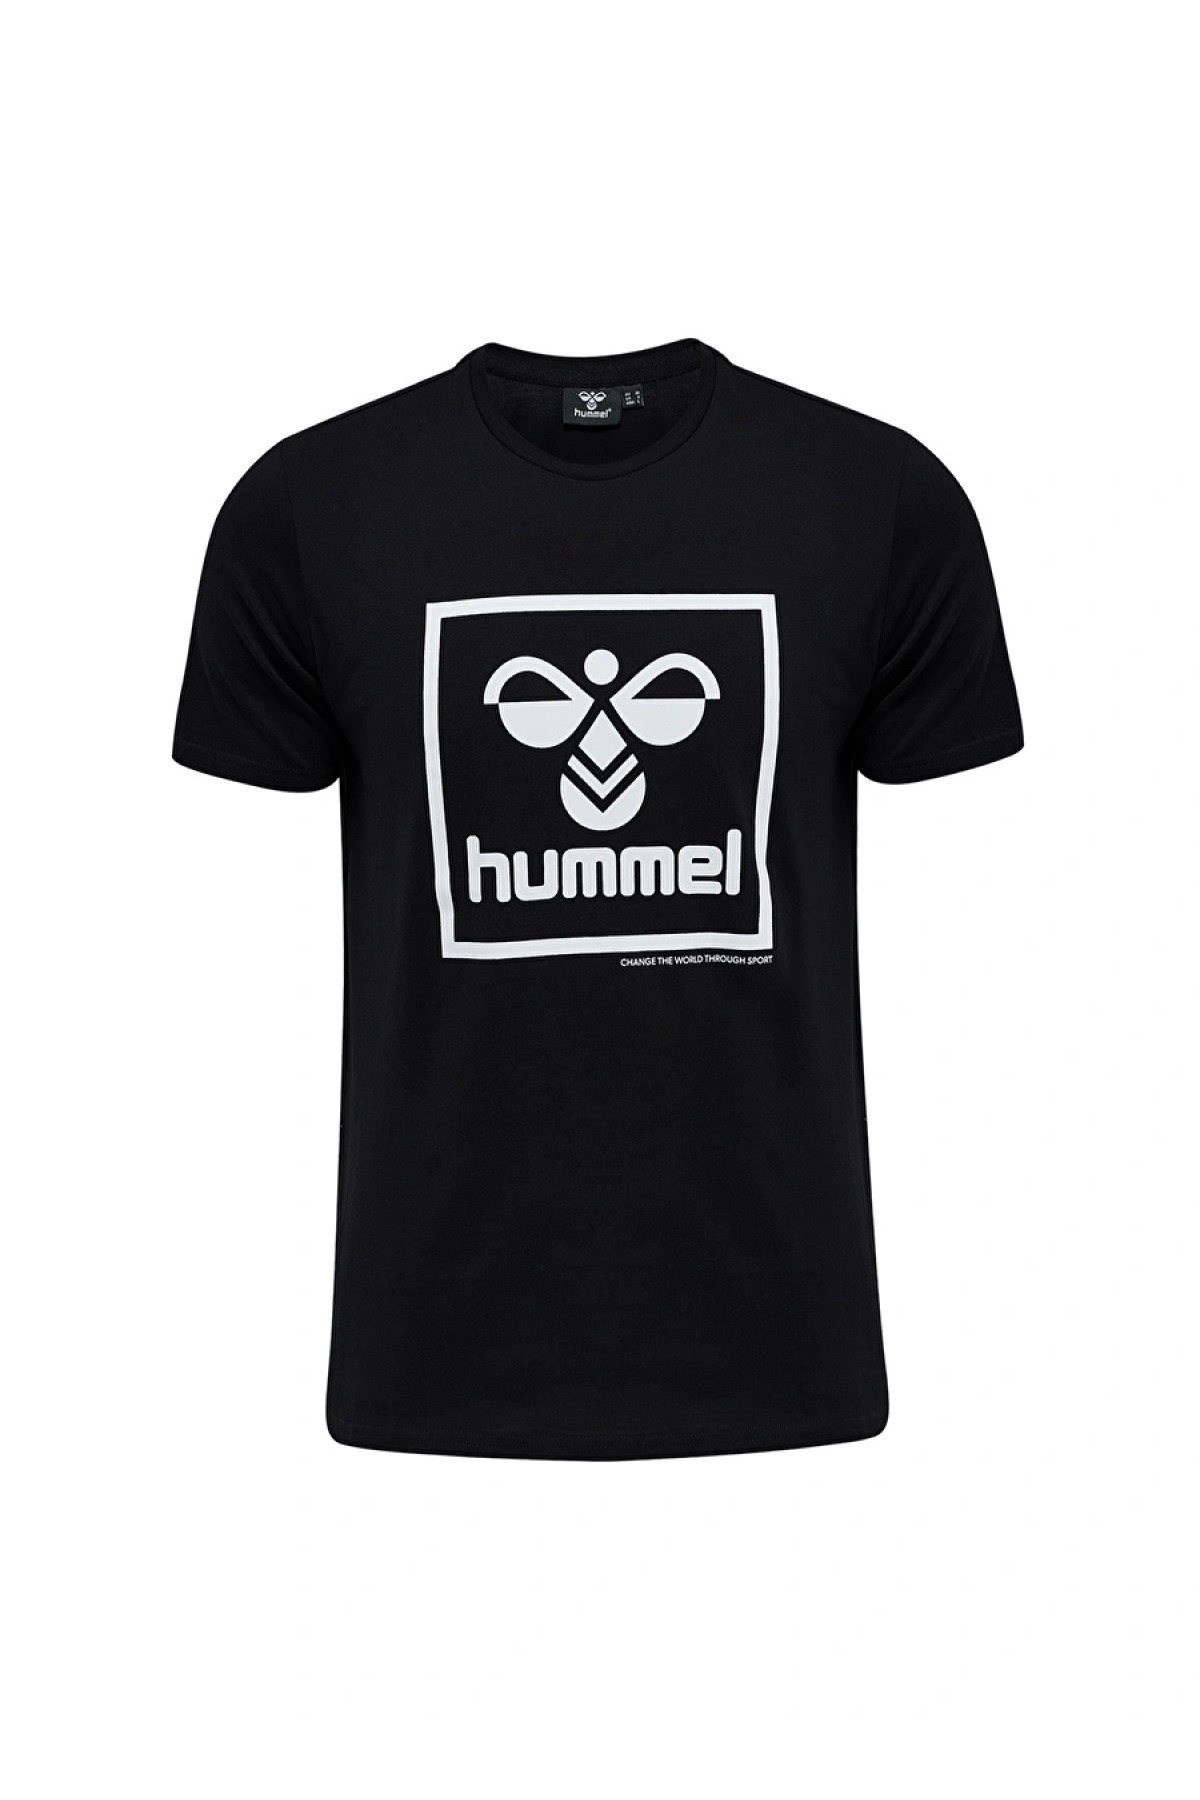 Hummel Erkek T-Shirt 911558-2001 Black